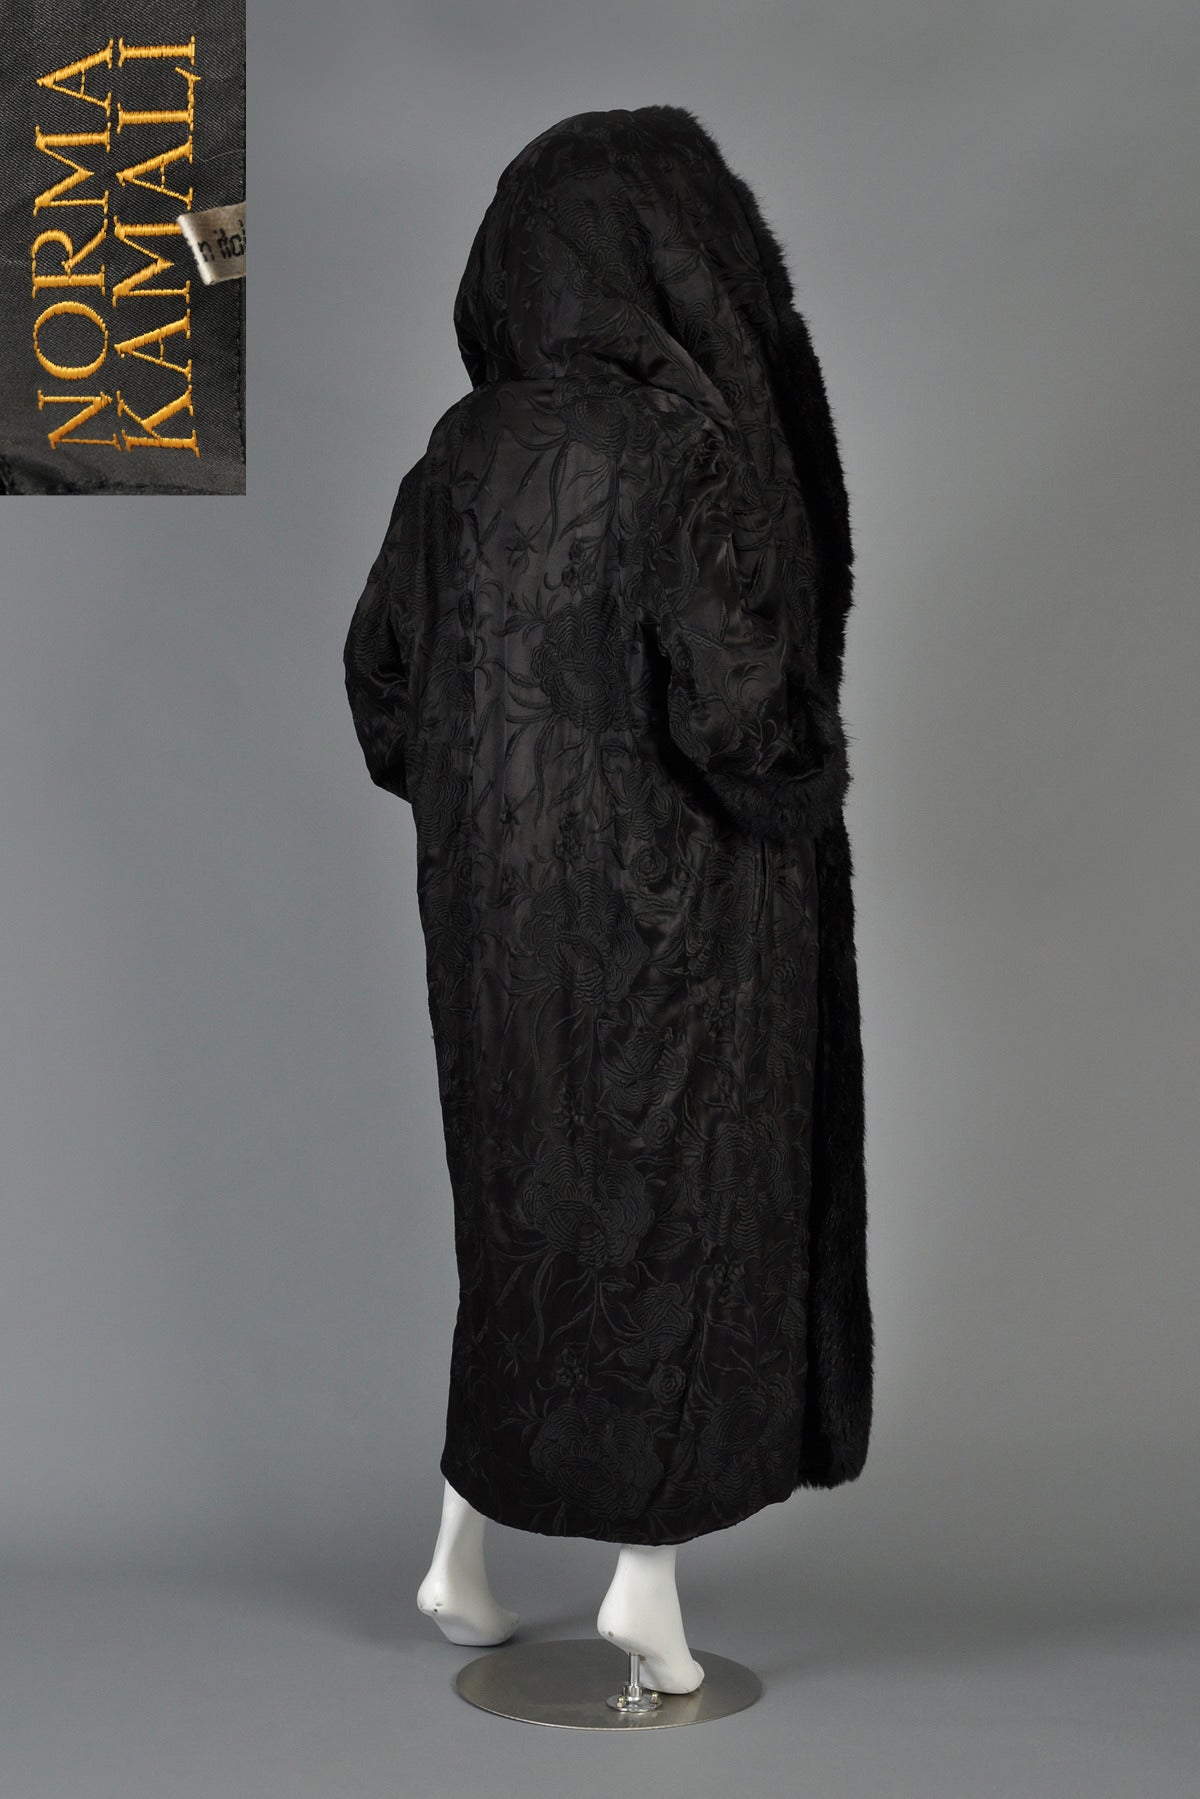 Norma Kamali Embroidered Satin Coat with MASSIVE Fur-lined Hood 5